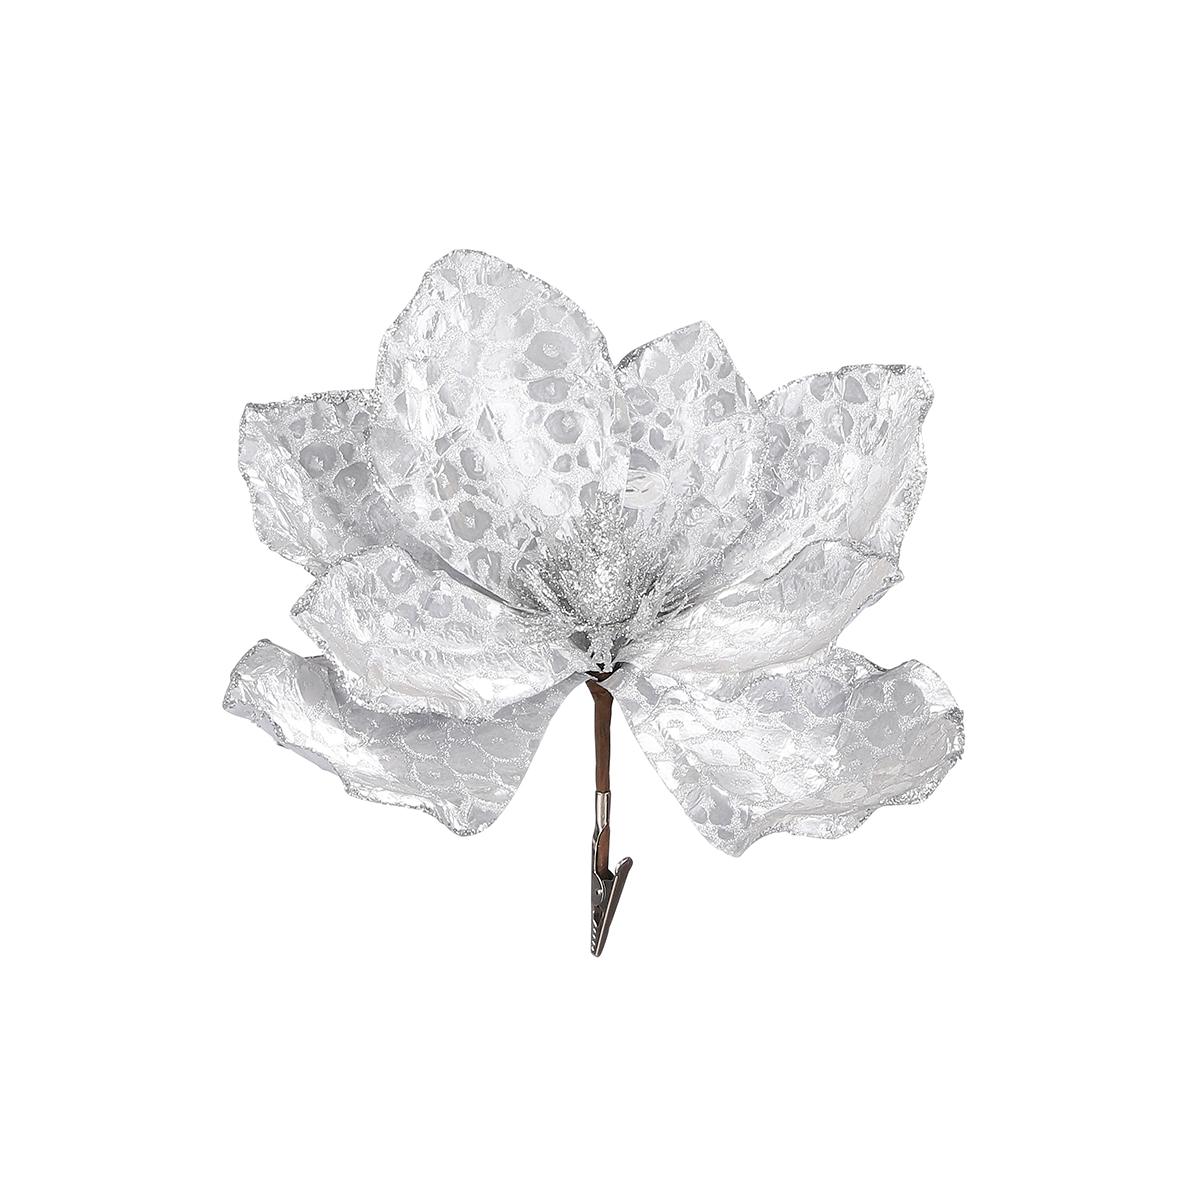 Selected image for Novogodišnji ukras Cvet magnolije srebrni